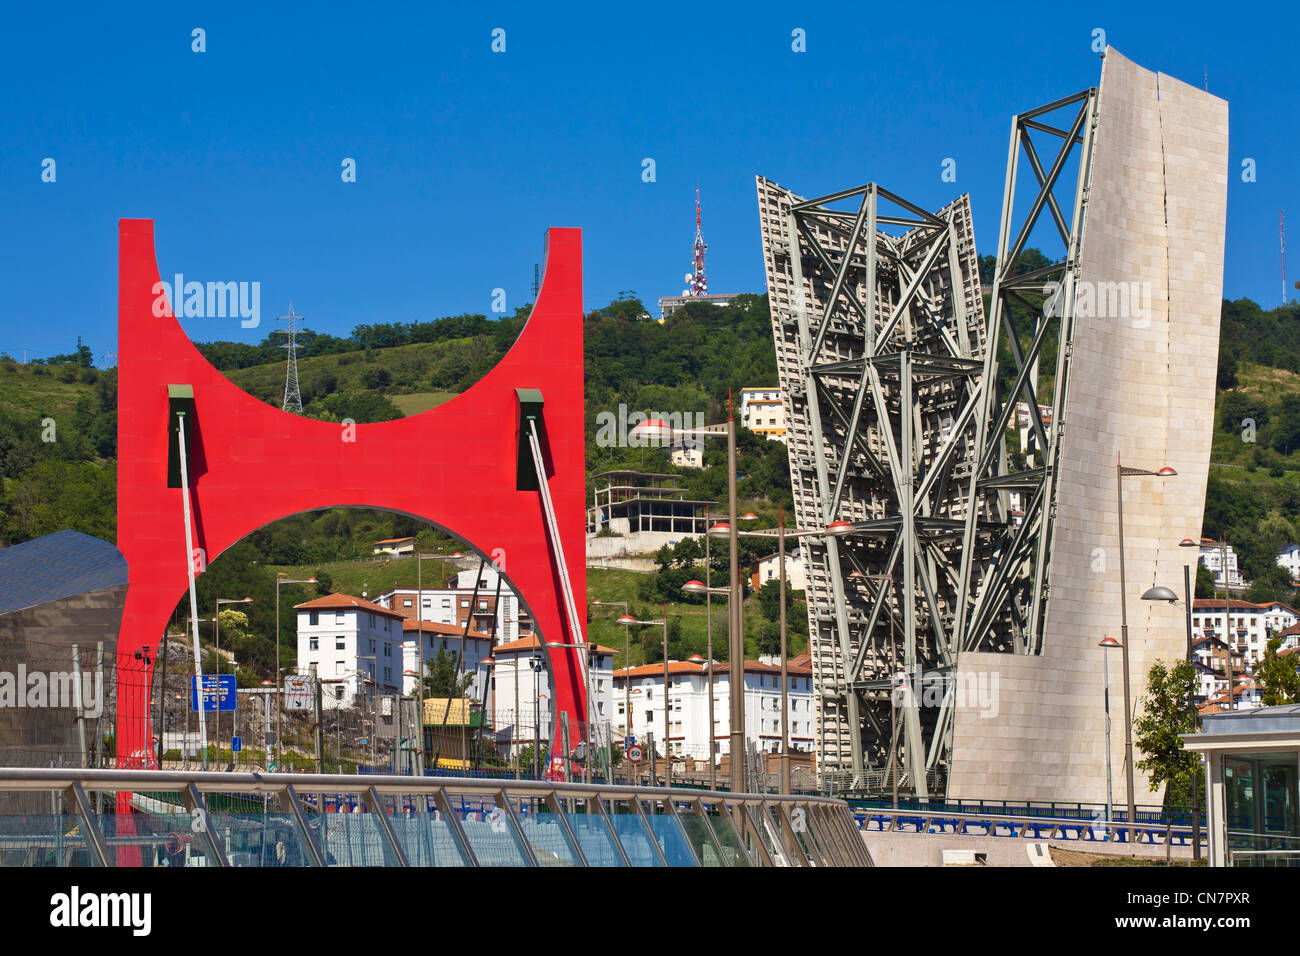 Spagna, Biscaye, Paese Basco spagnolo, Bilbao, Salve ponte con archi Les Rouges artpiece dall artista francese Daniel Buren Foto Stock